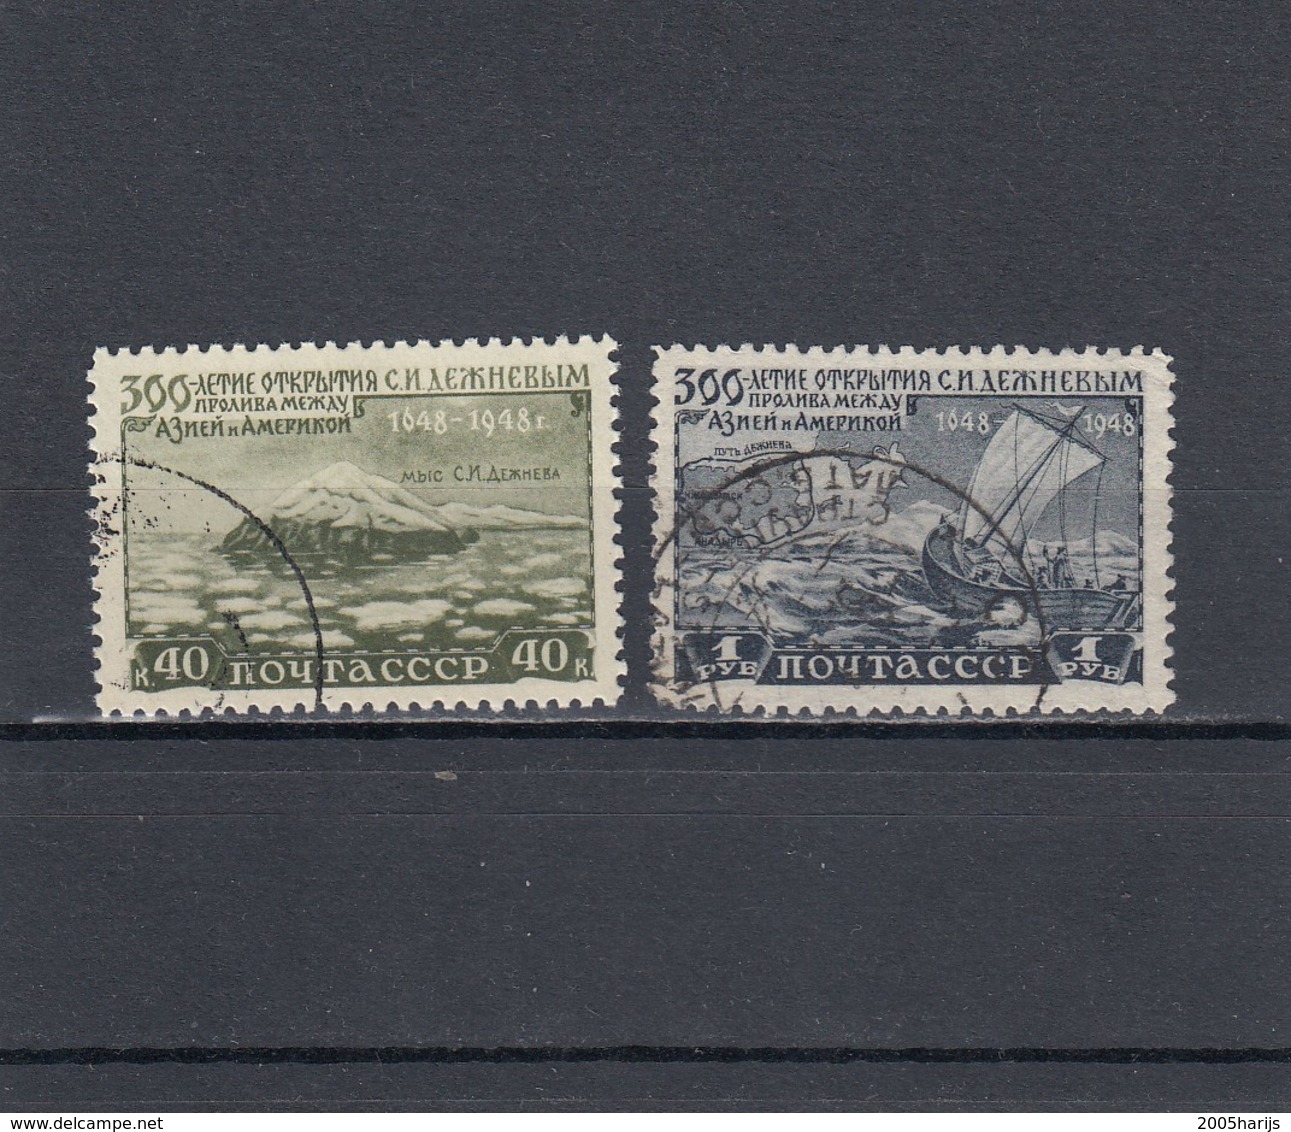 RUSSIA 1949 Used Stamps MiNr. 1316-1317 - Usados